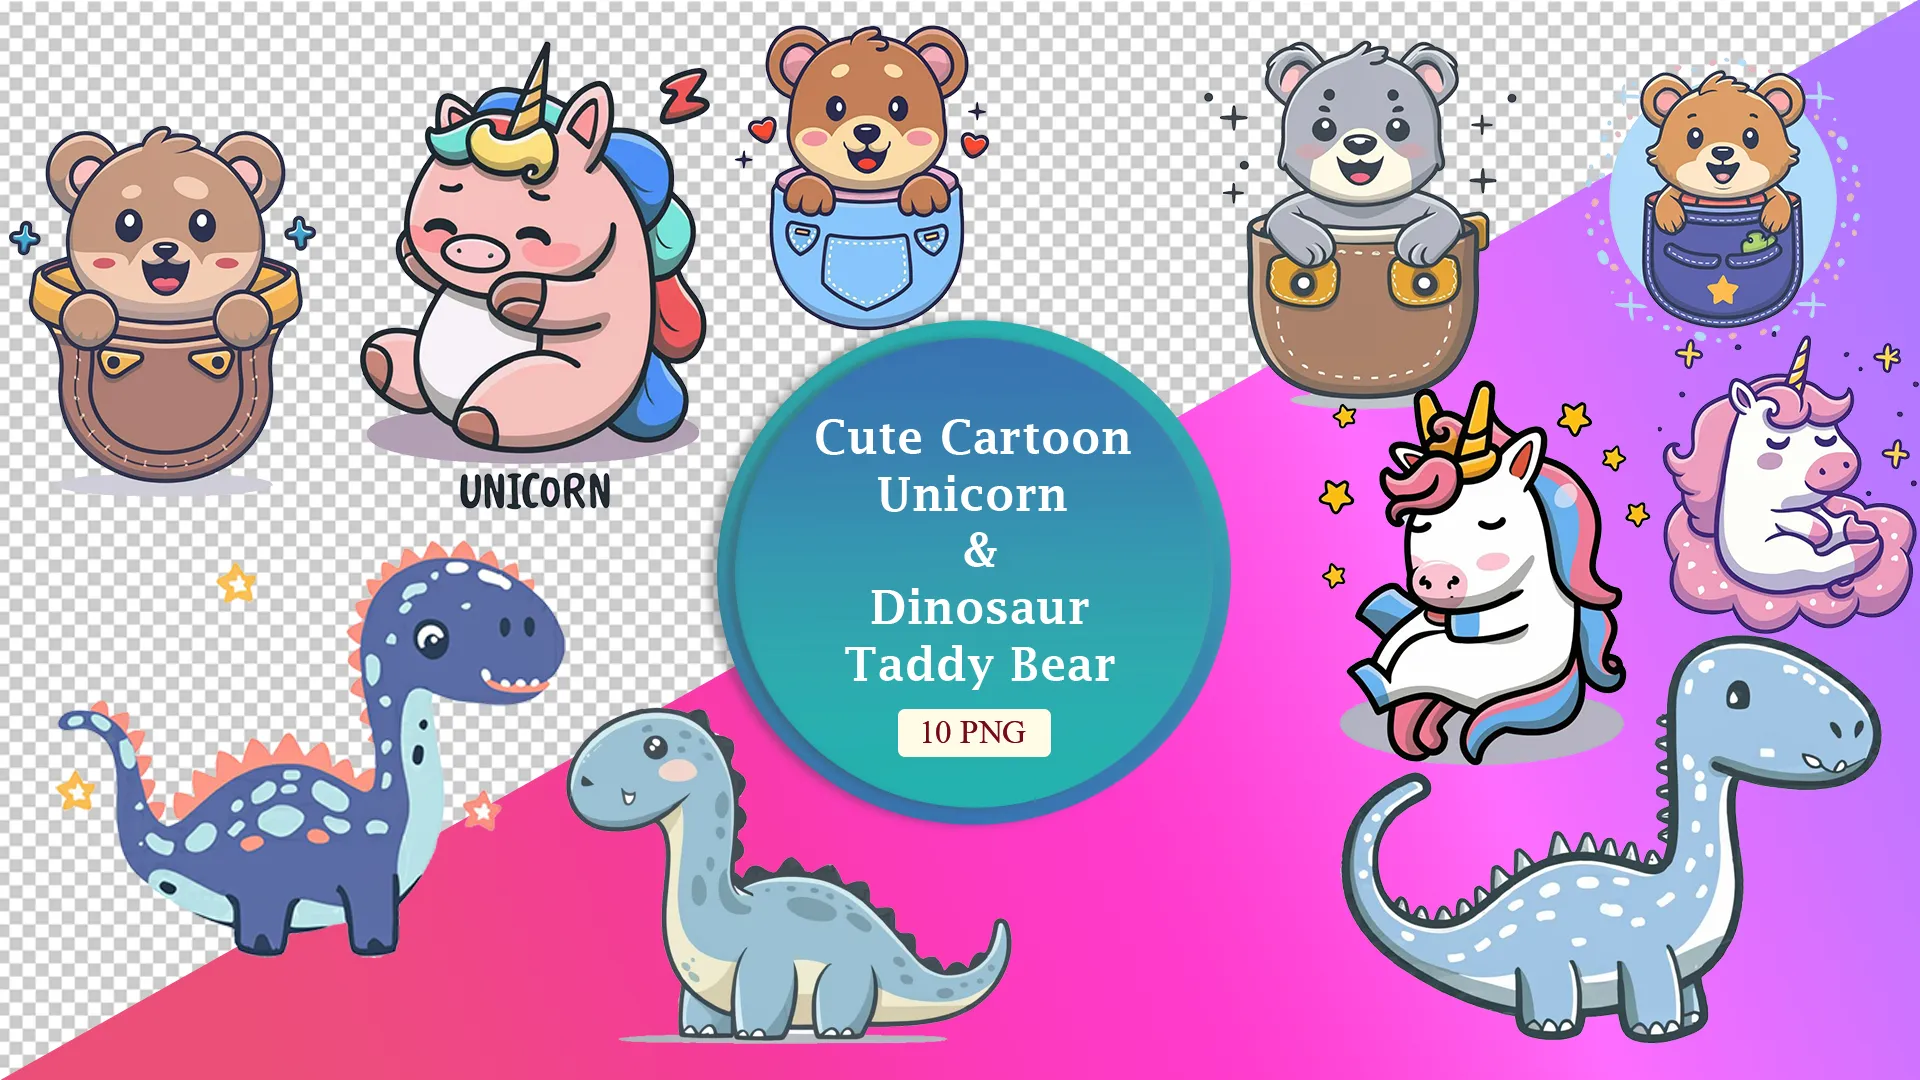 Unicorn and Dinosaur Cartoon Set for Children's Design Pack image